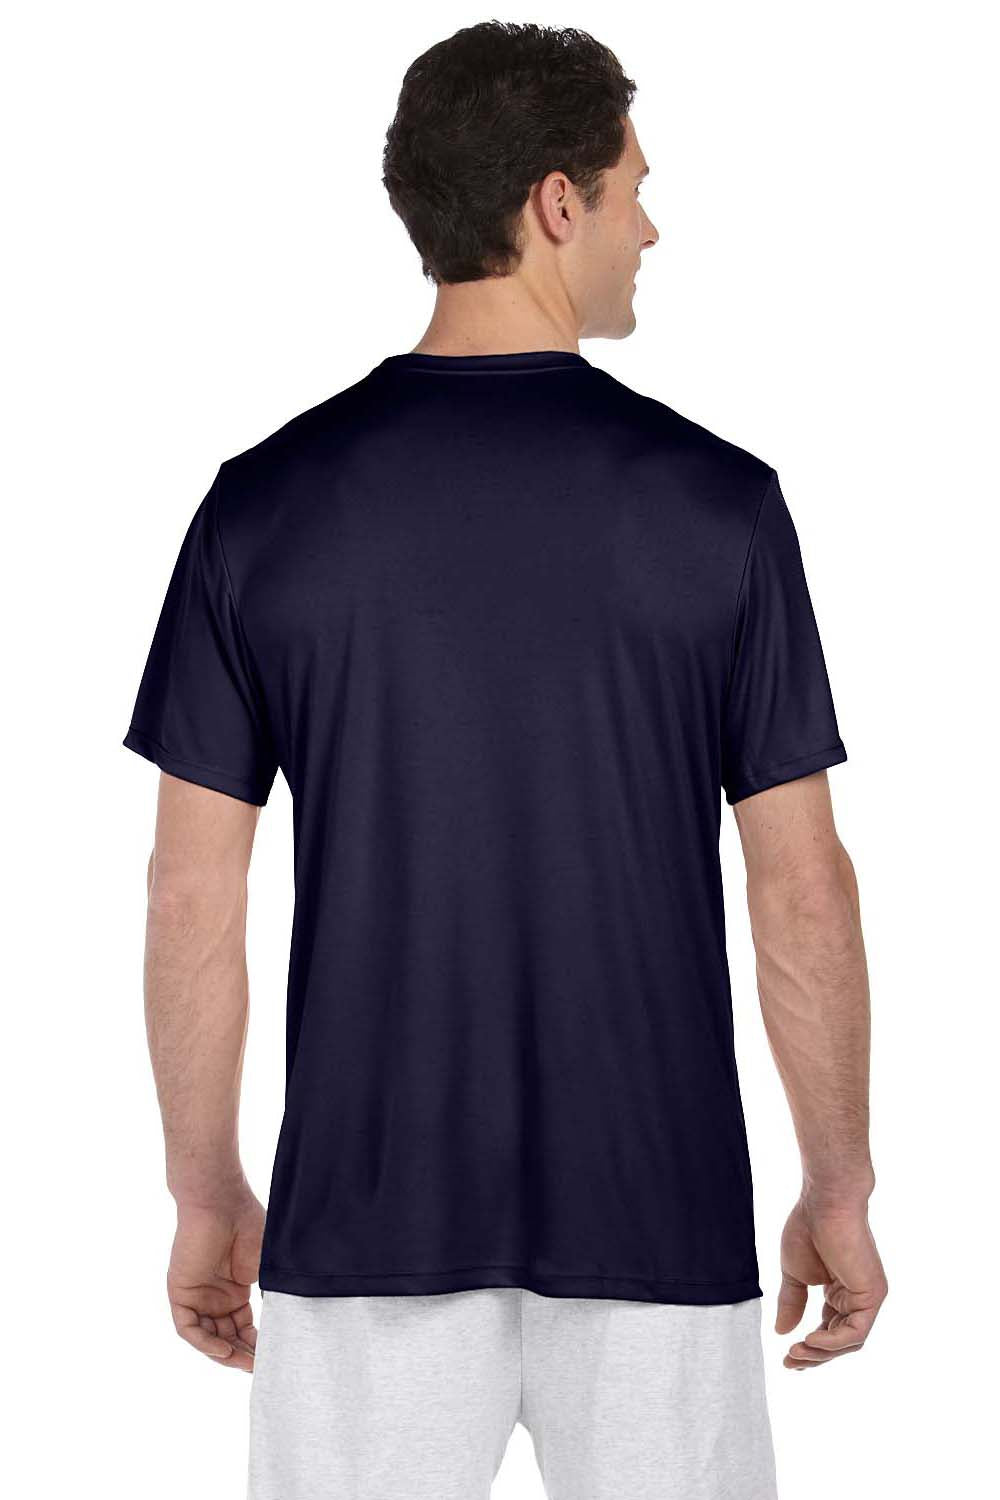 Hanes 4820 Mens Cool DRI FreshIQ Moisture Wicking Short Sleeve Crewneck T-Shirt Navy Blue Back